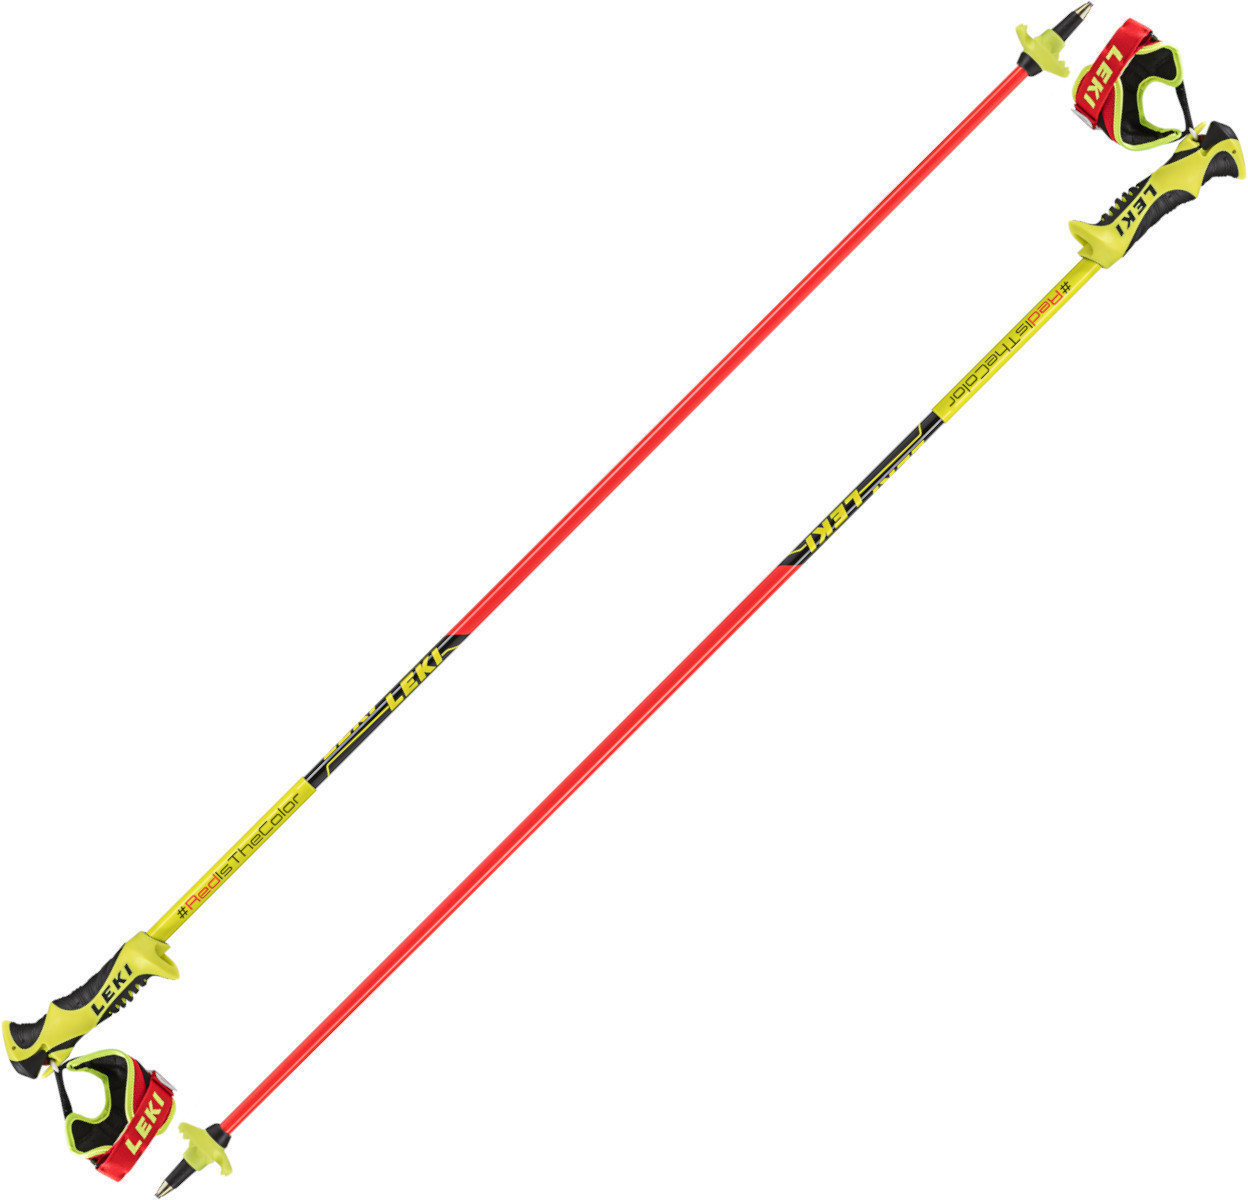 Ski Poles Leki Worldcup Racing Comp JR Neonred/Neonyellow/Black 115 cm Ski Poles